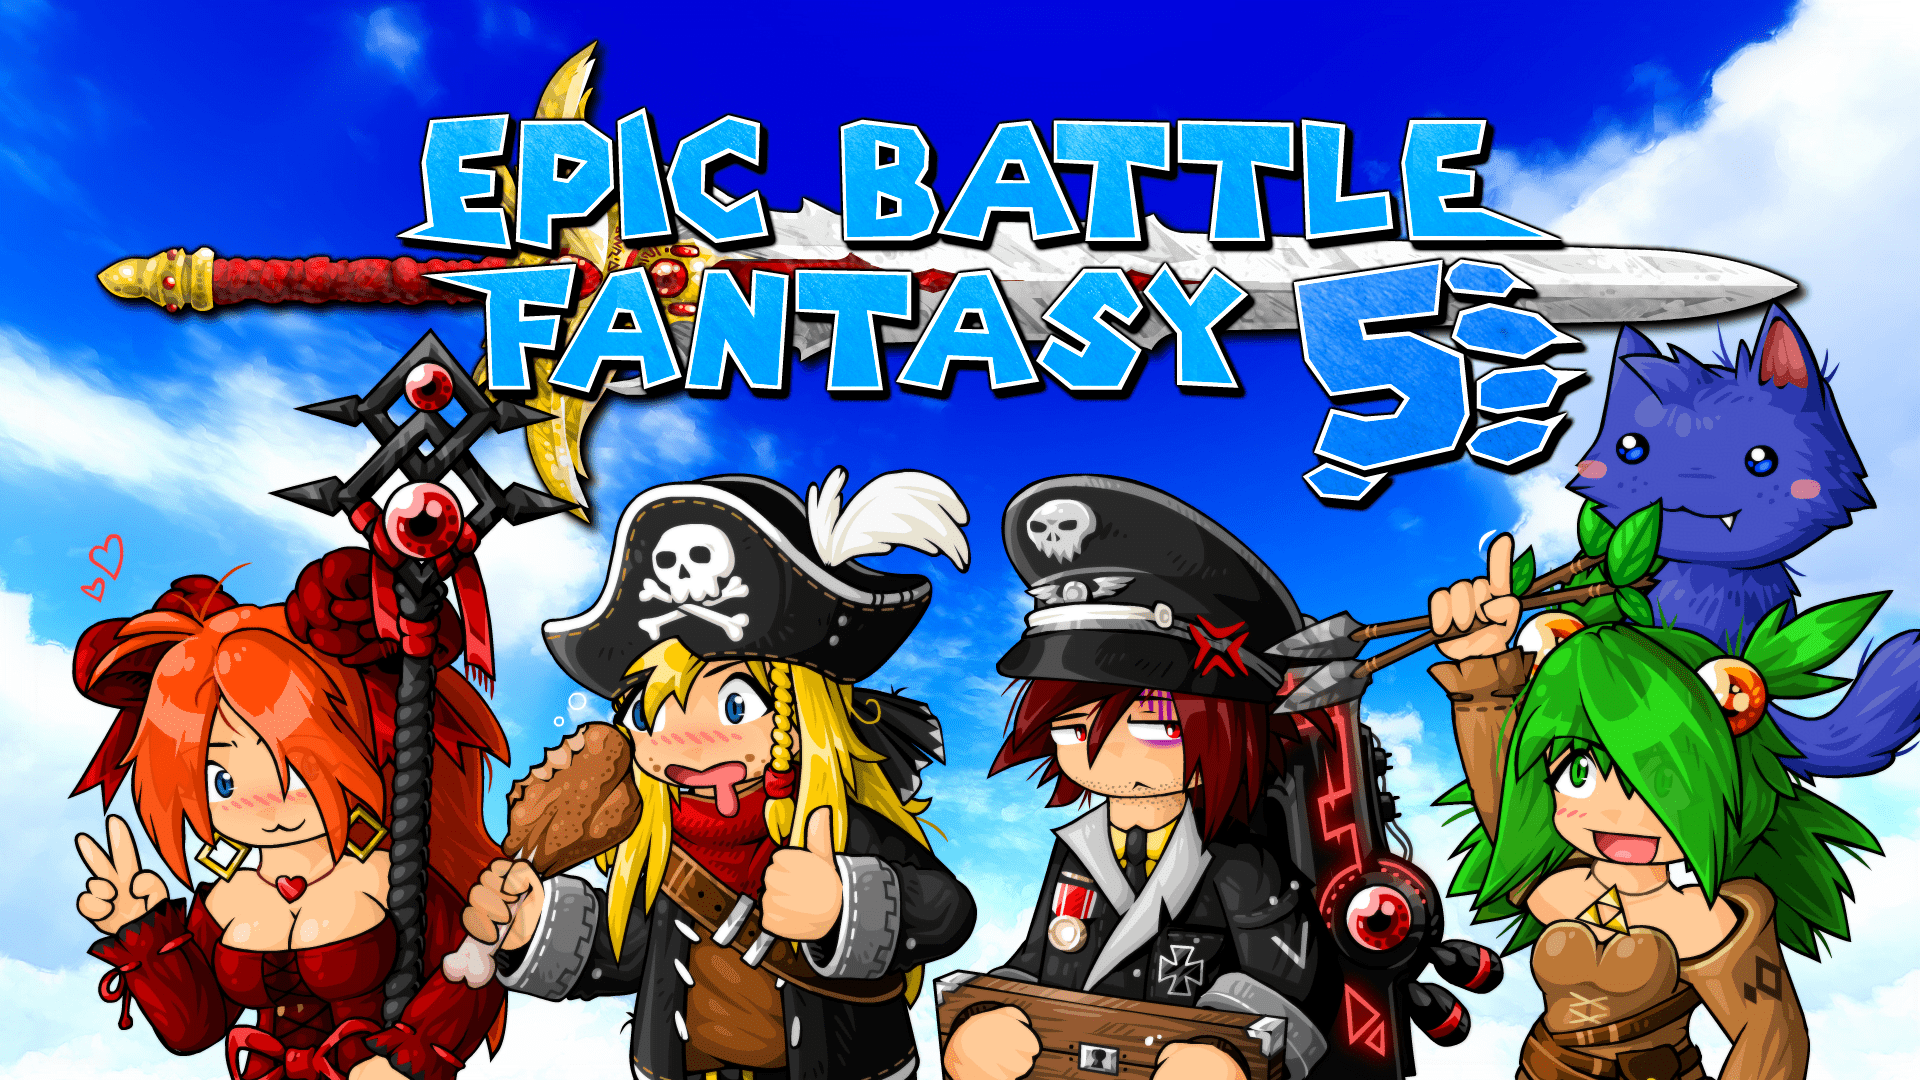 Epic Battle Fantasy 5 PS4 Full Version Free Download